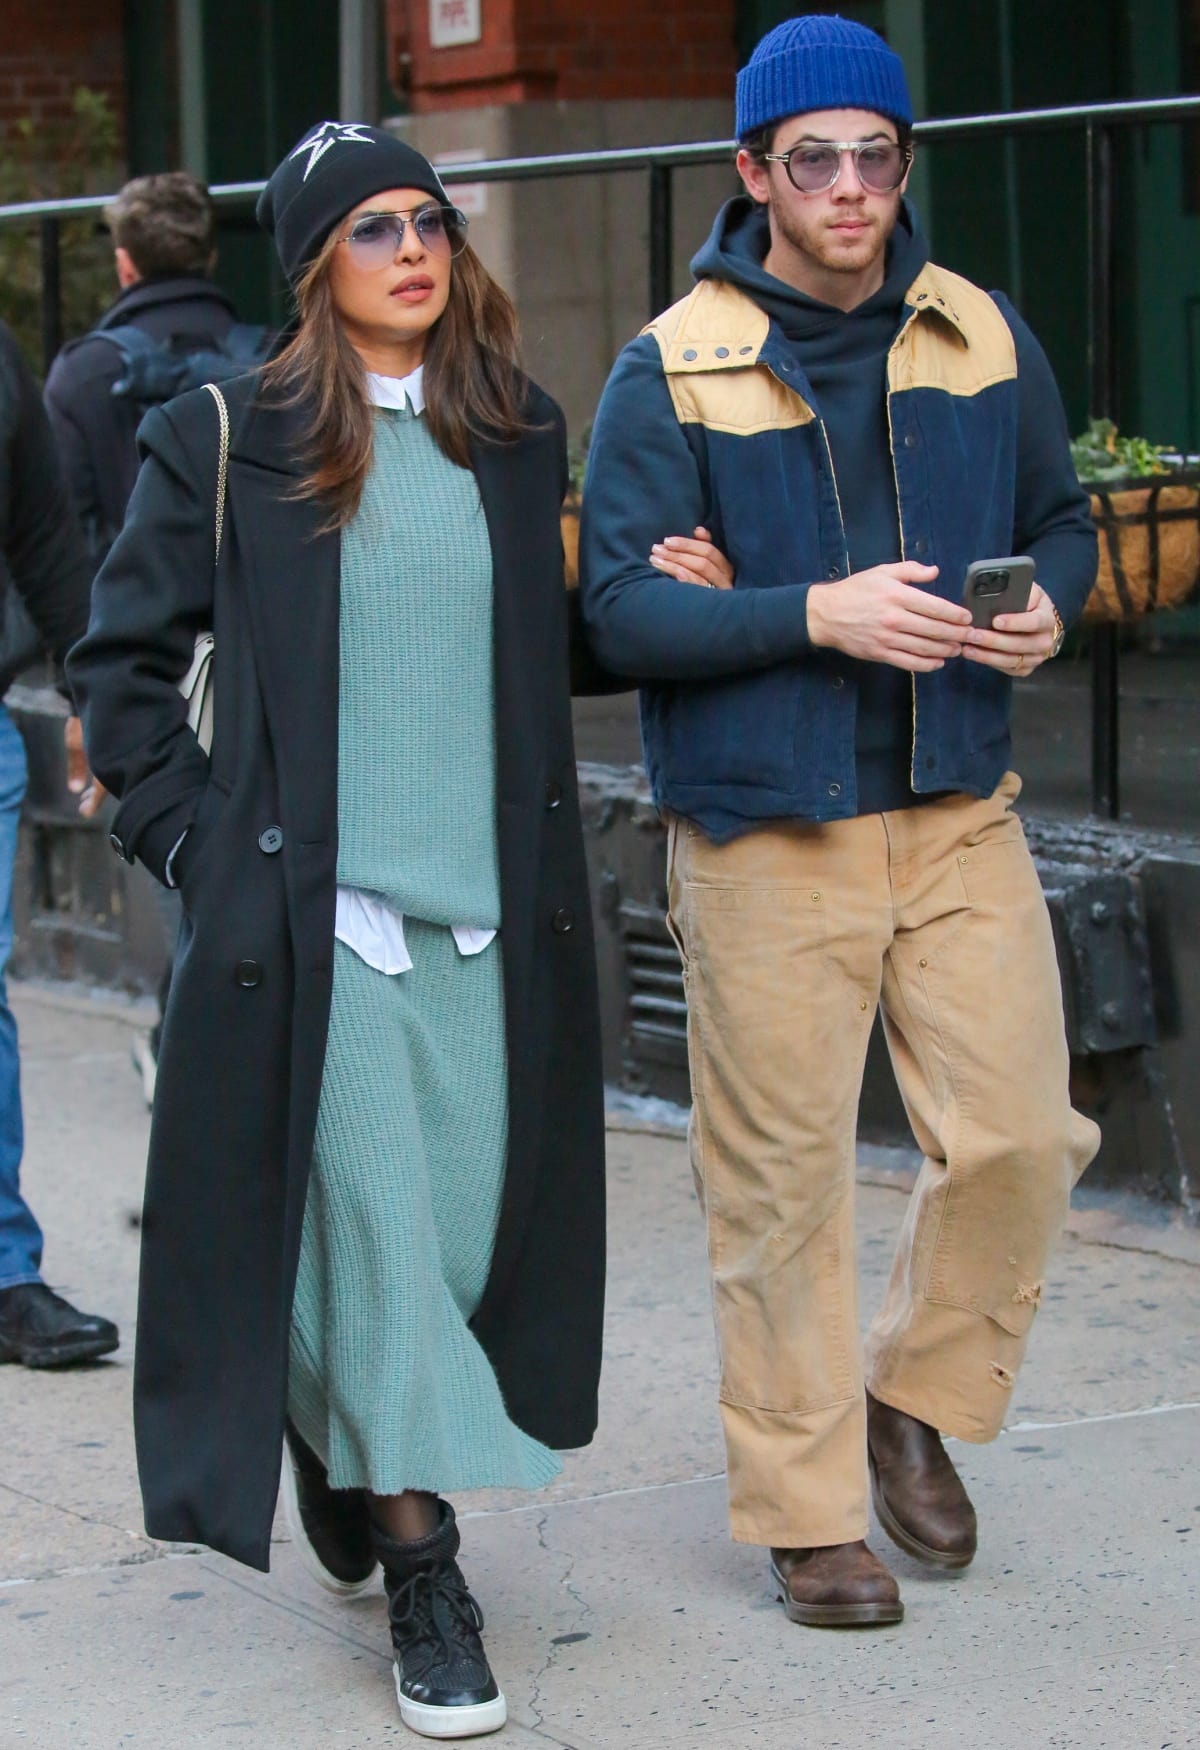 Priyanka Chopra and Nick Jonas taking a casual stroll in New York City